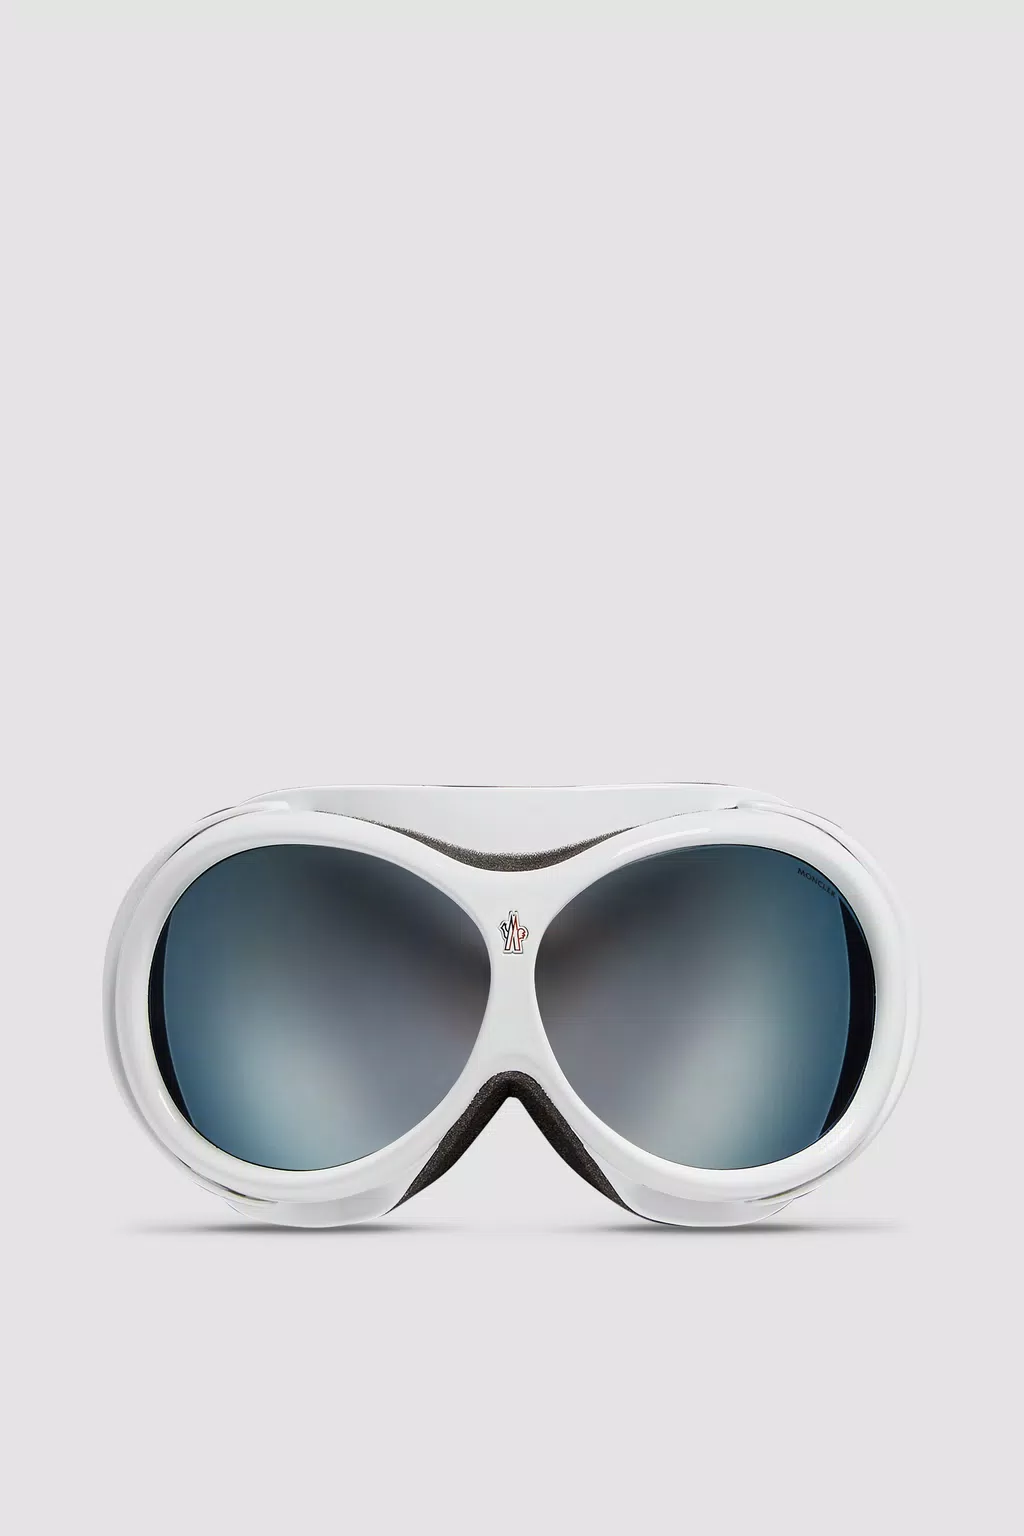 Sunglasses for Men - Accessories